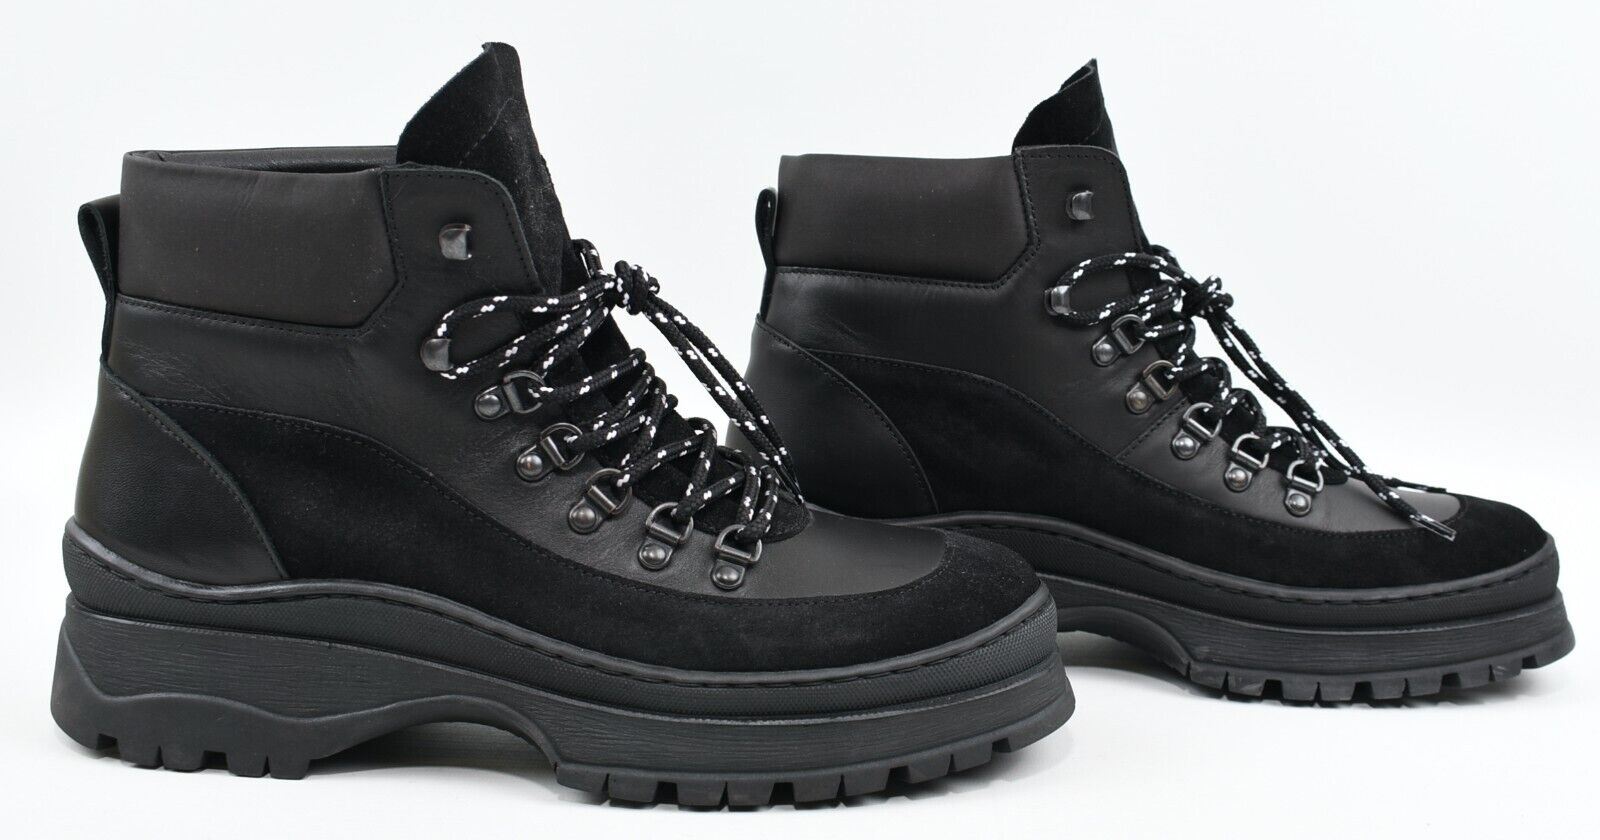 TED BAKER Men's WESTONN Leather Hiker Boots, Black, size UK 9 /EU 43